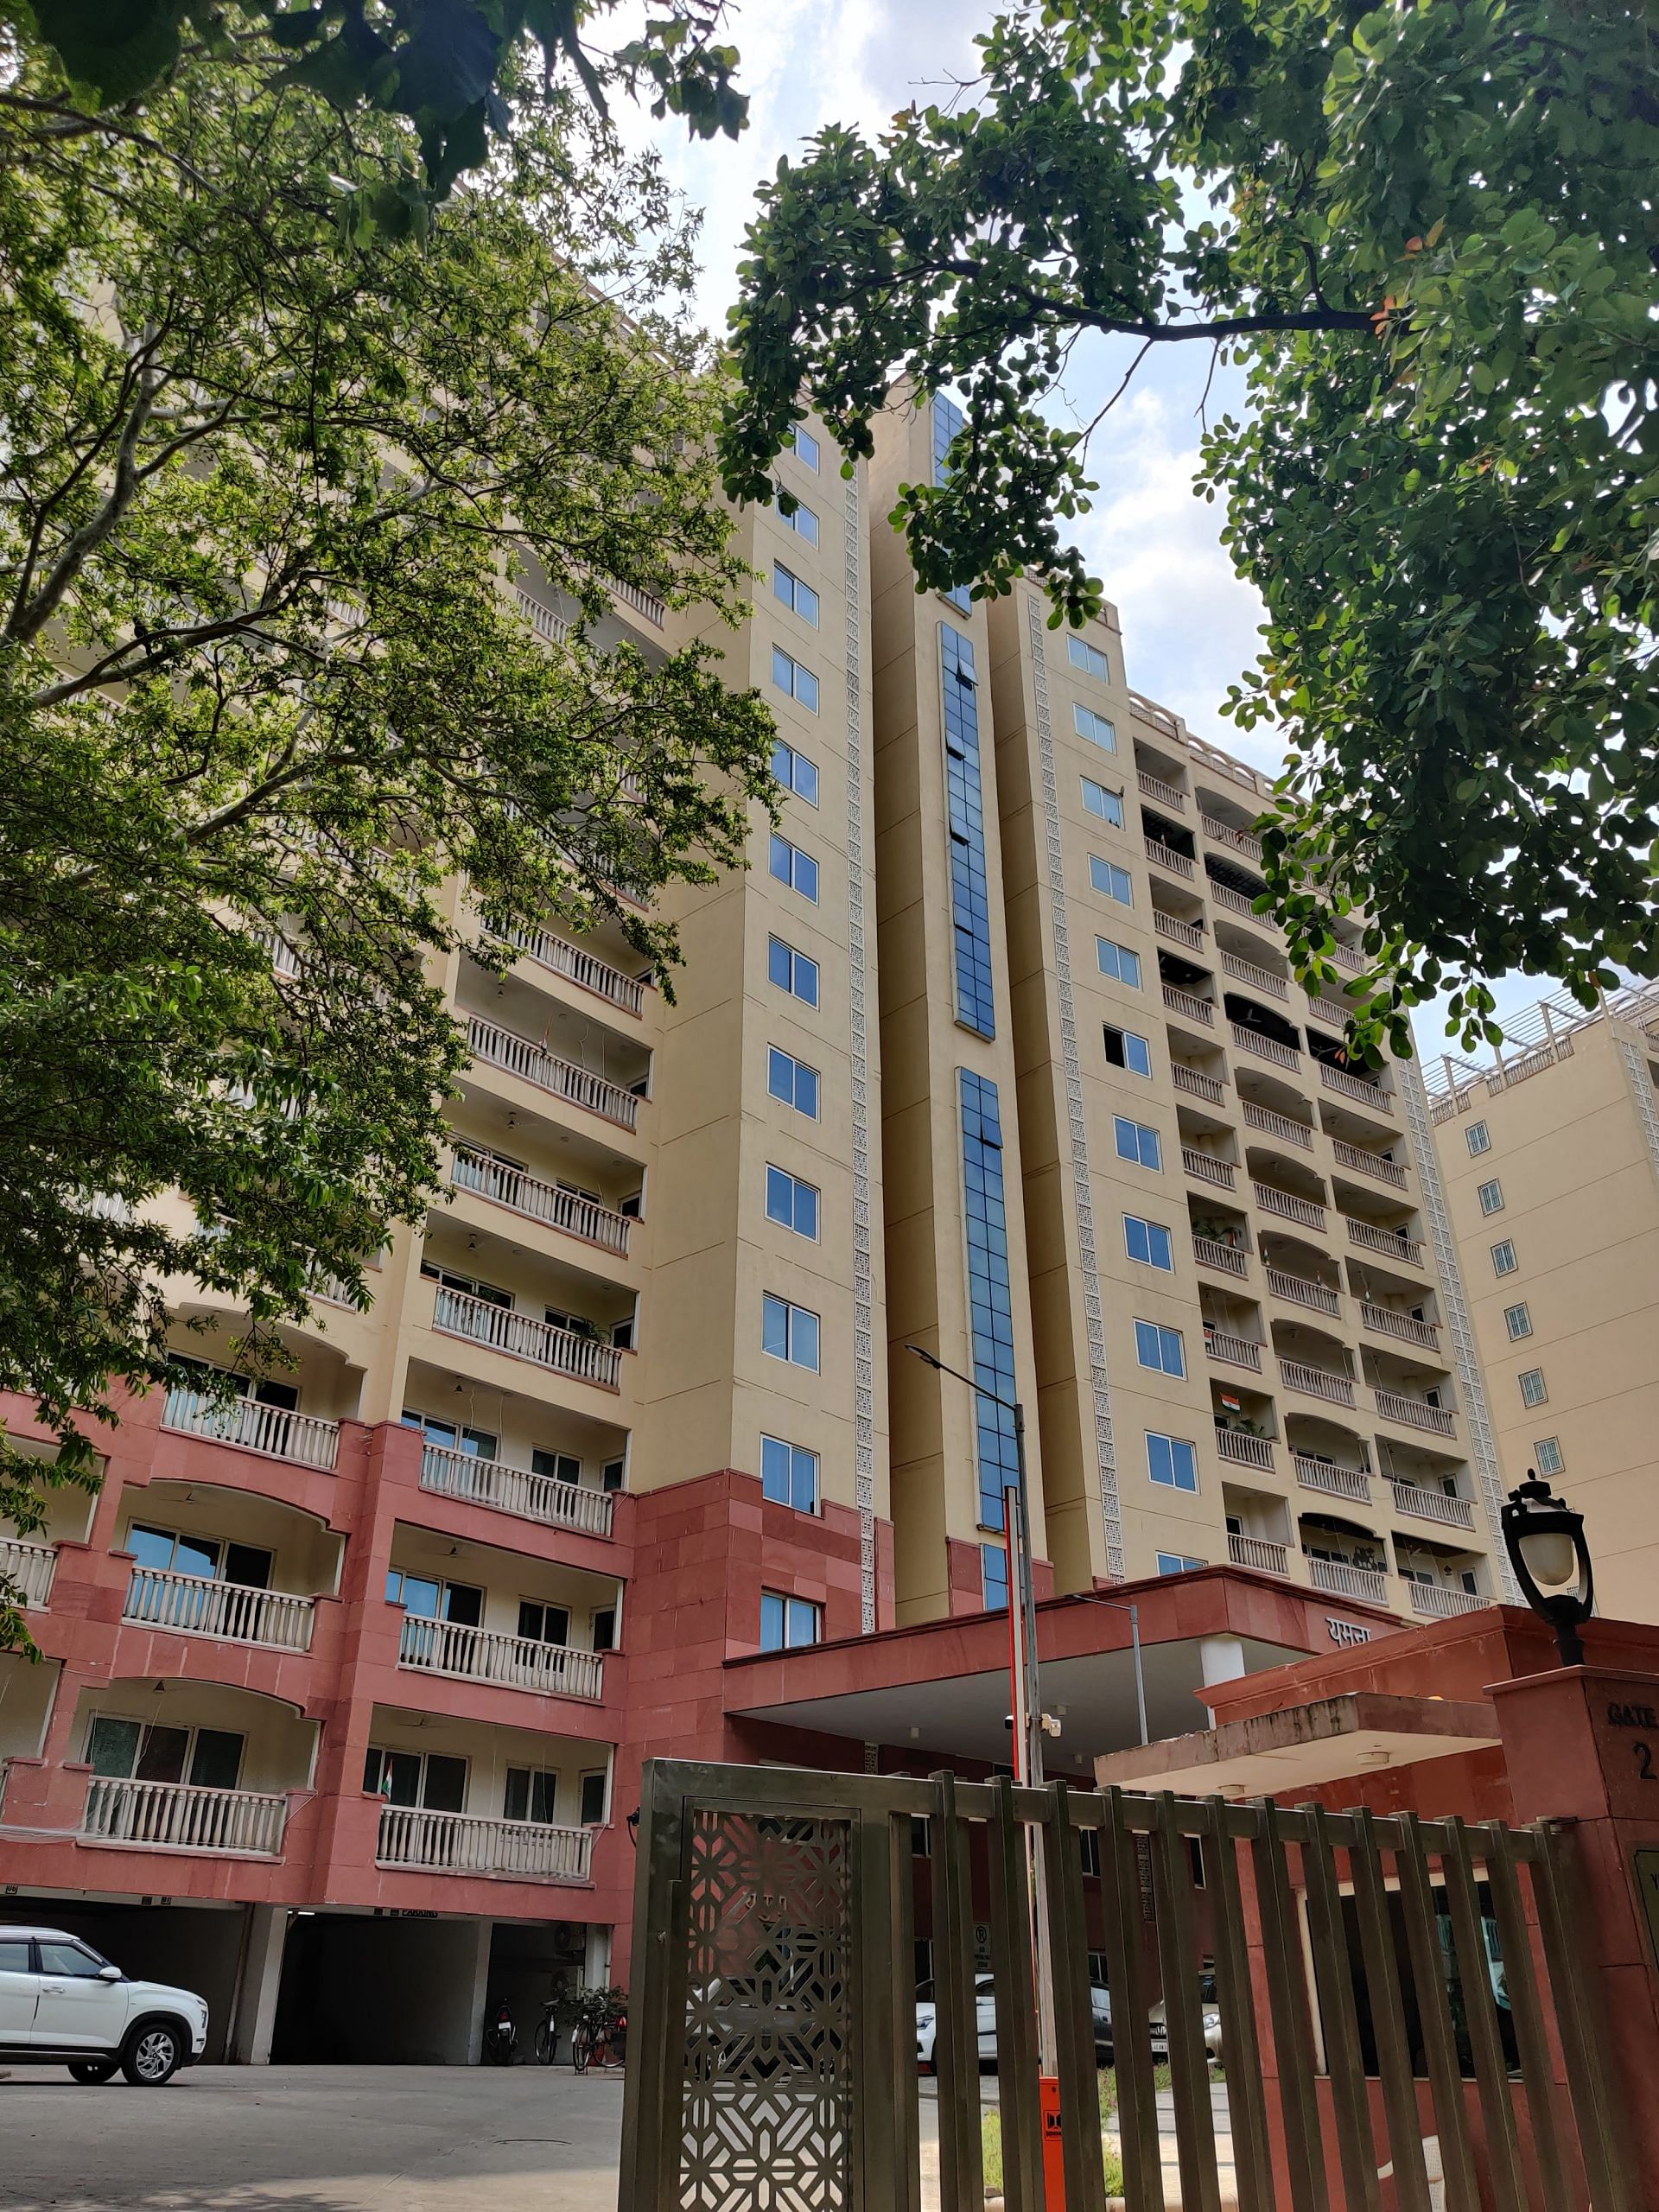 13-storeyed MPs Awas Apartments on Pandit Pant Marg | Bismee Taskin | ThePrint